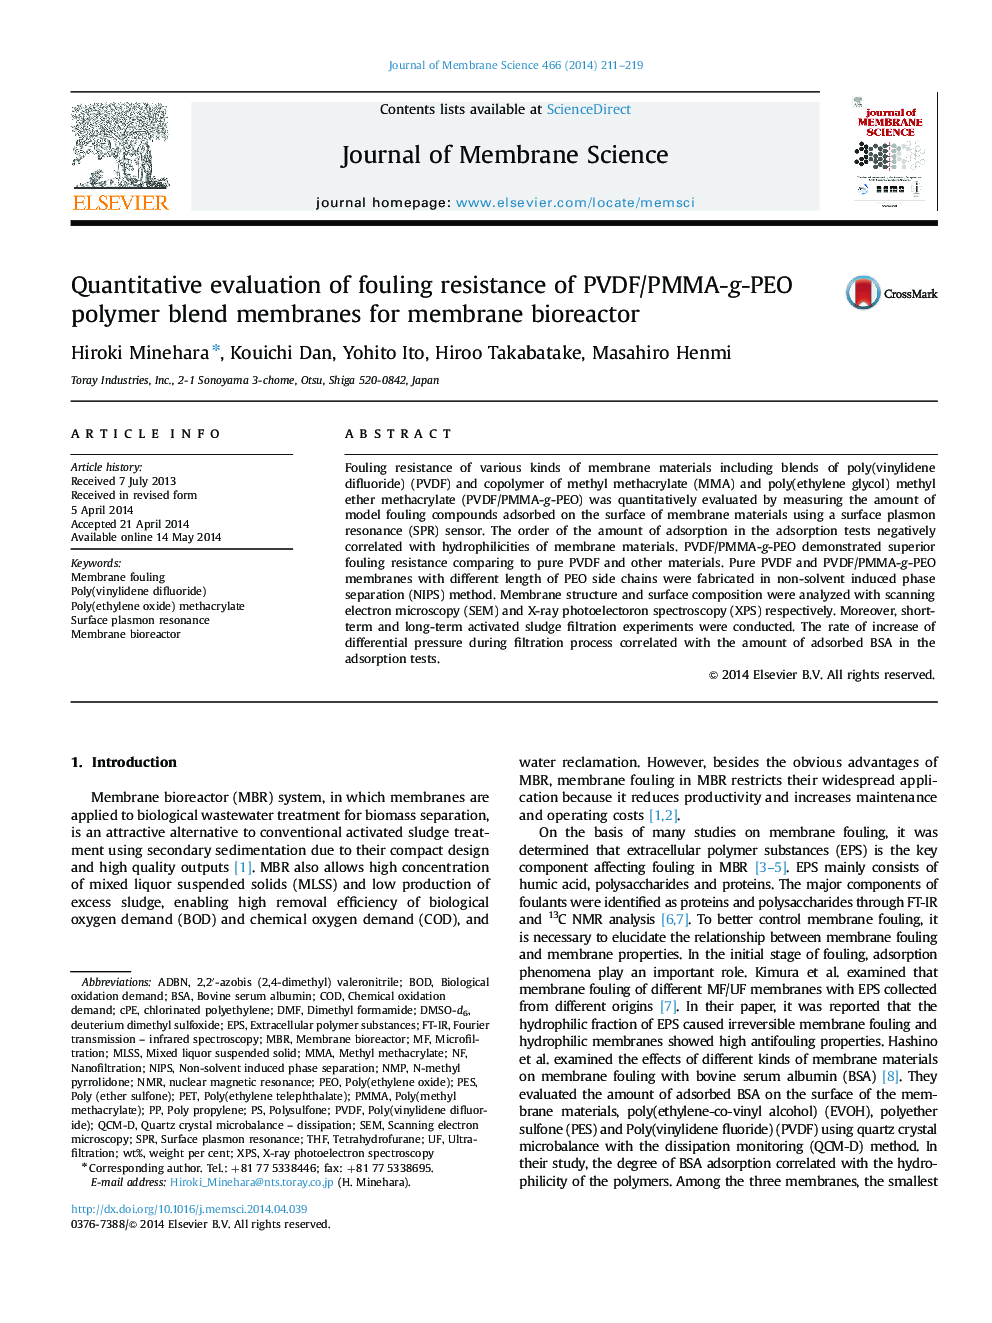 Quantitative evaluation of fouling resistance of PVDF/PMMA-g-PEO polymer blend membranes for membrane bioreactor